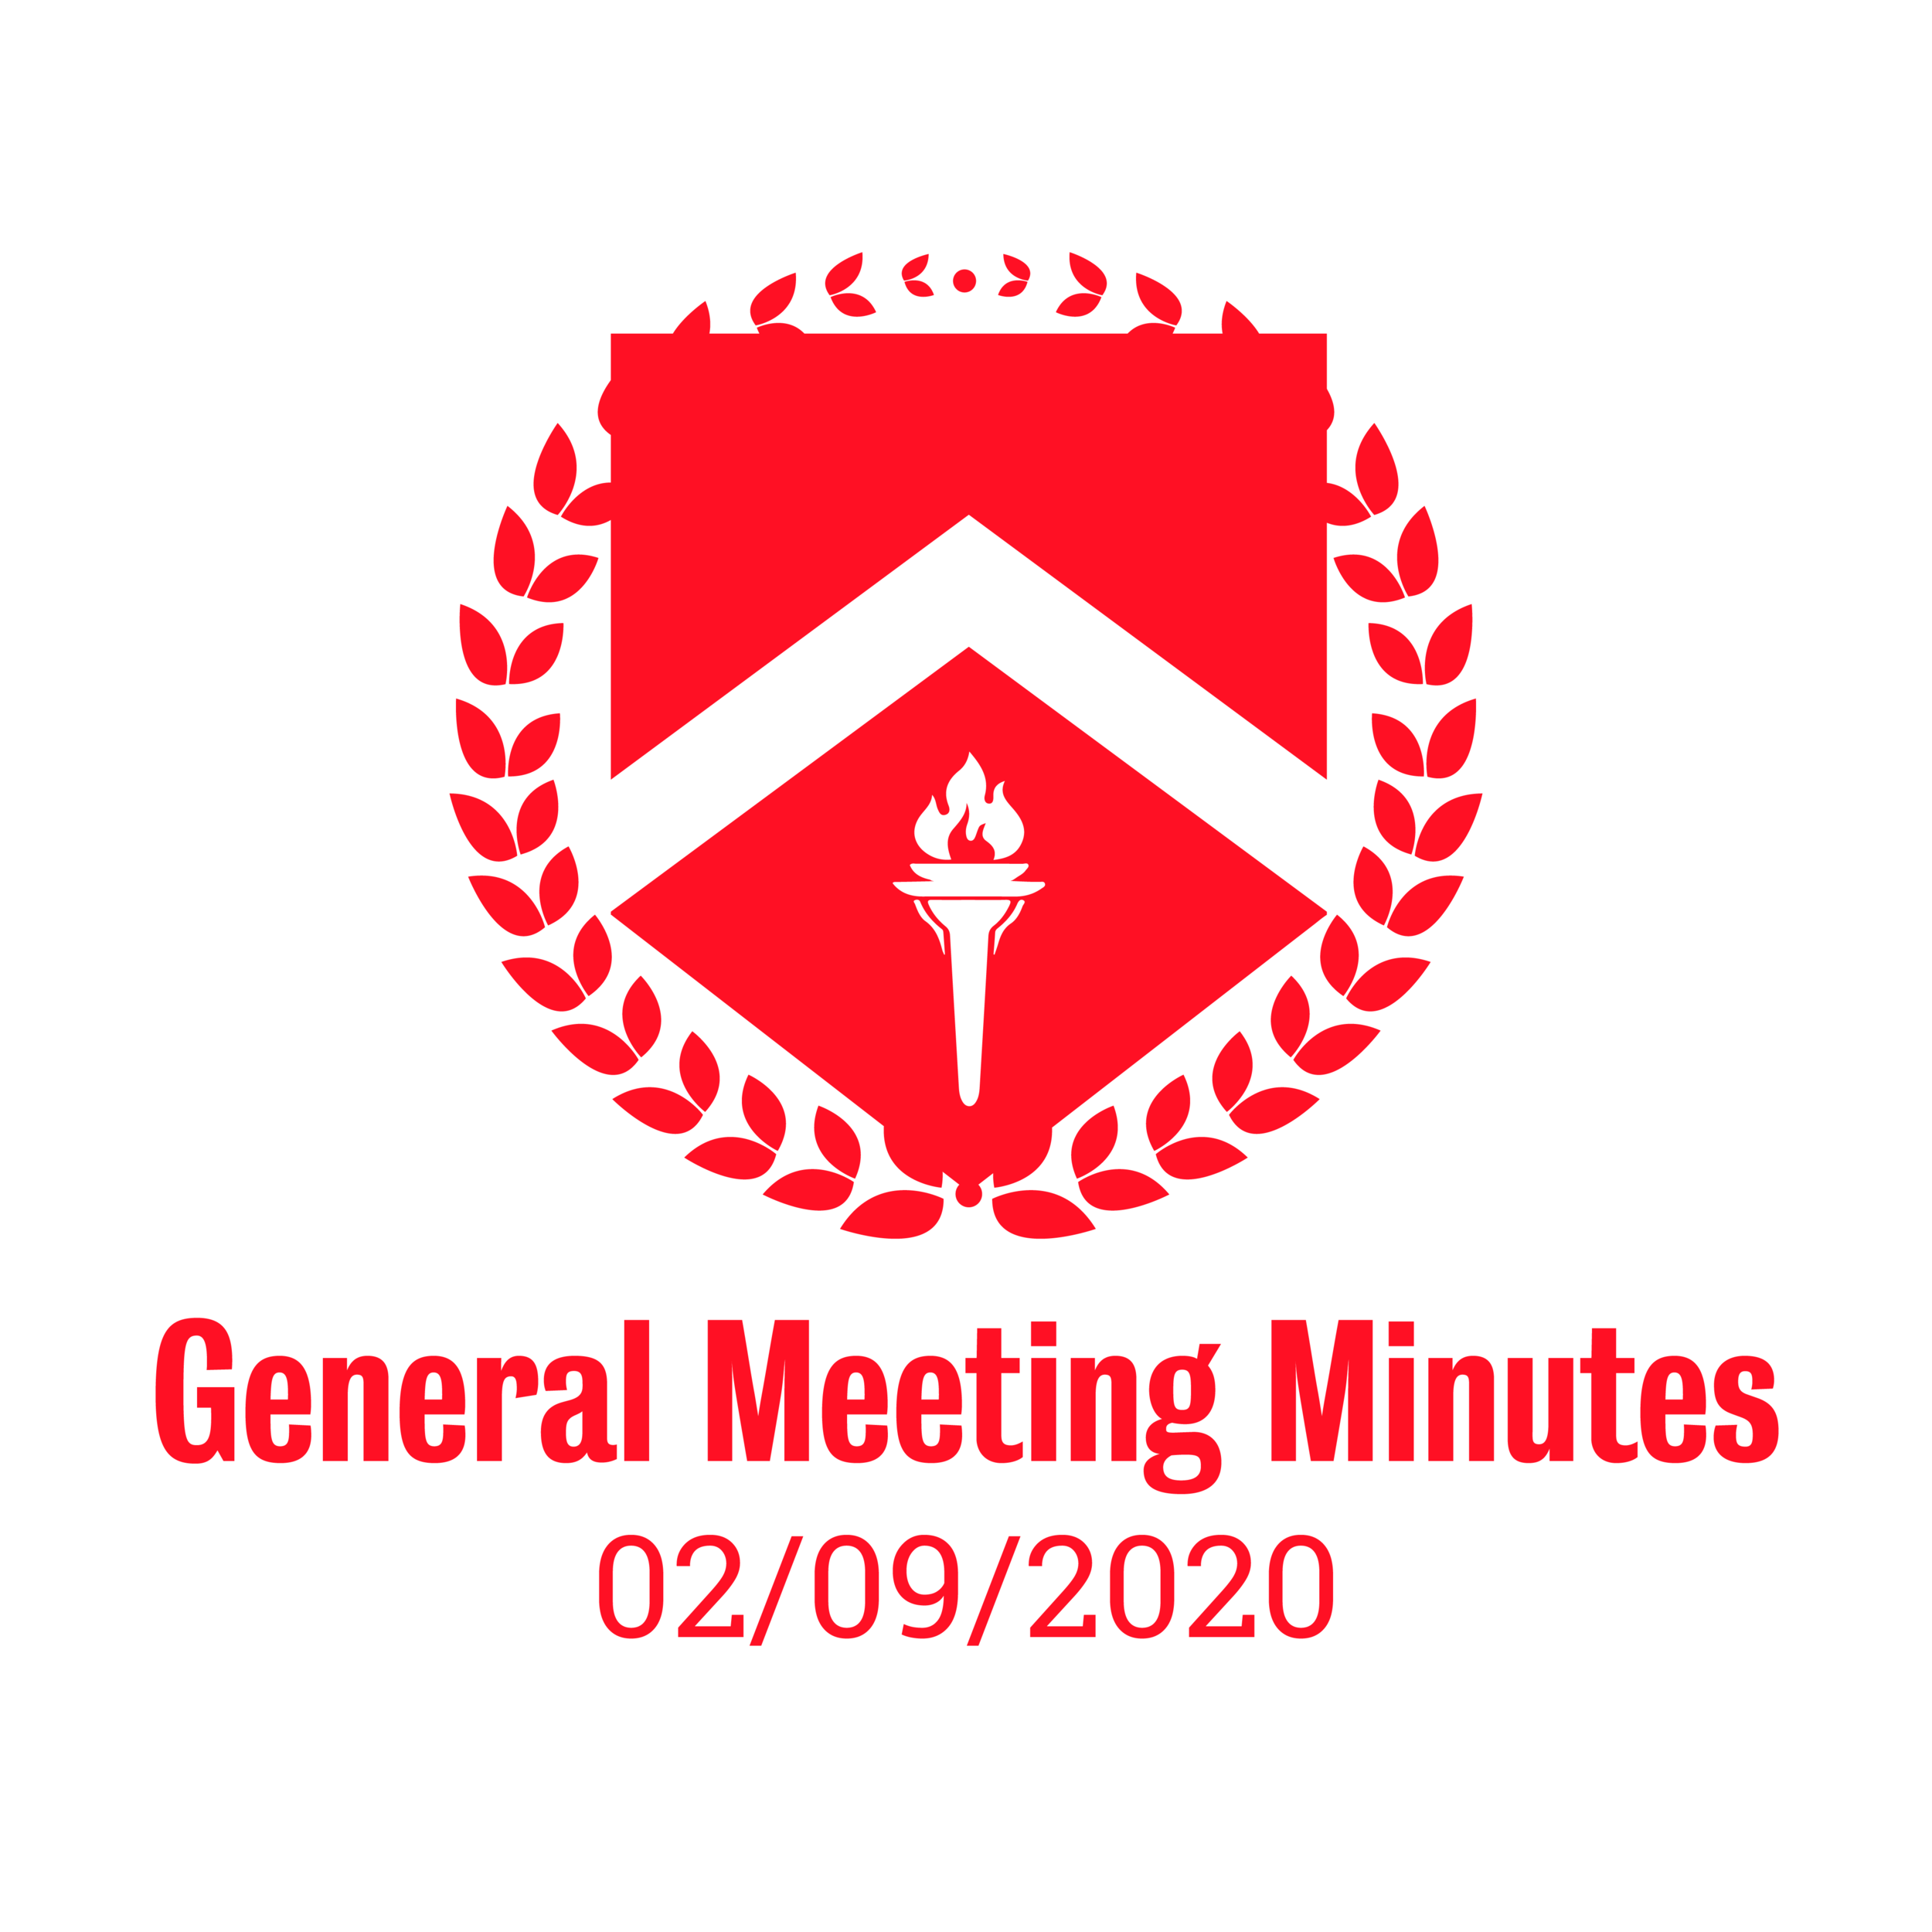 General Meeting Minutes 02/09/2020